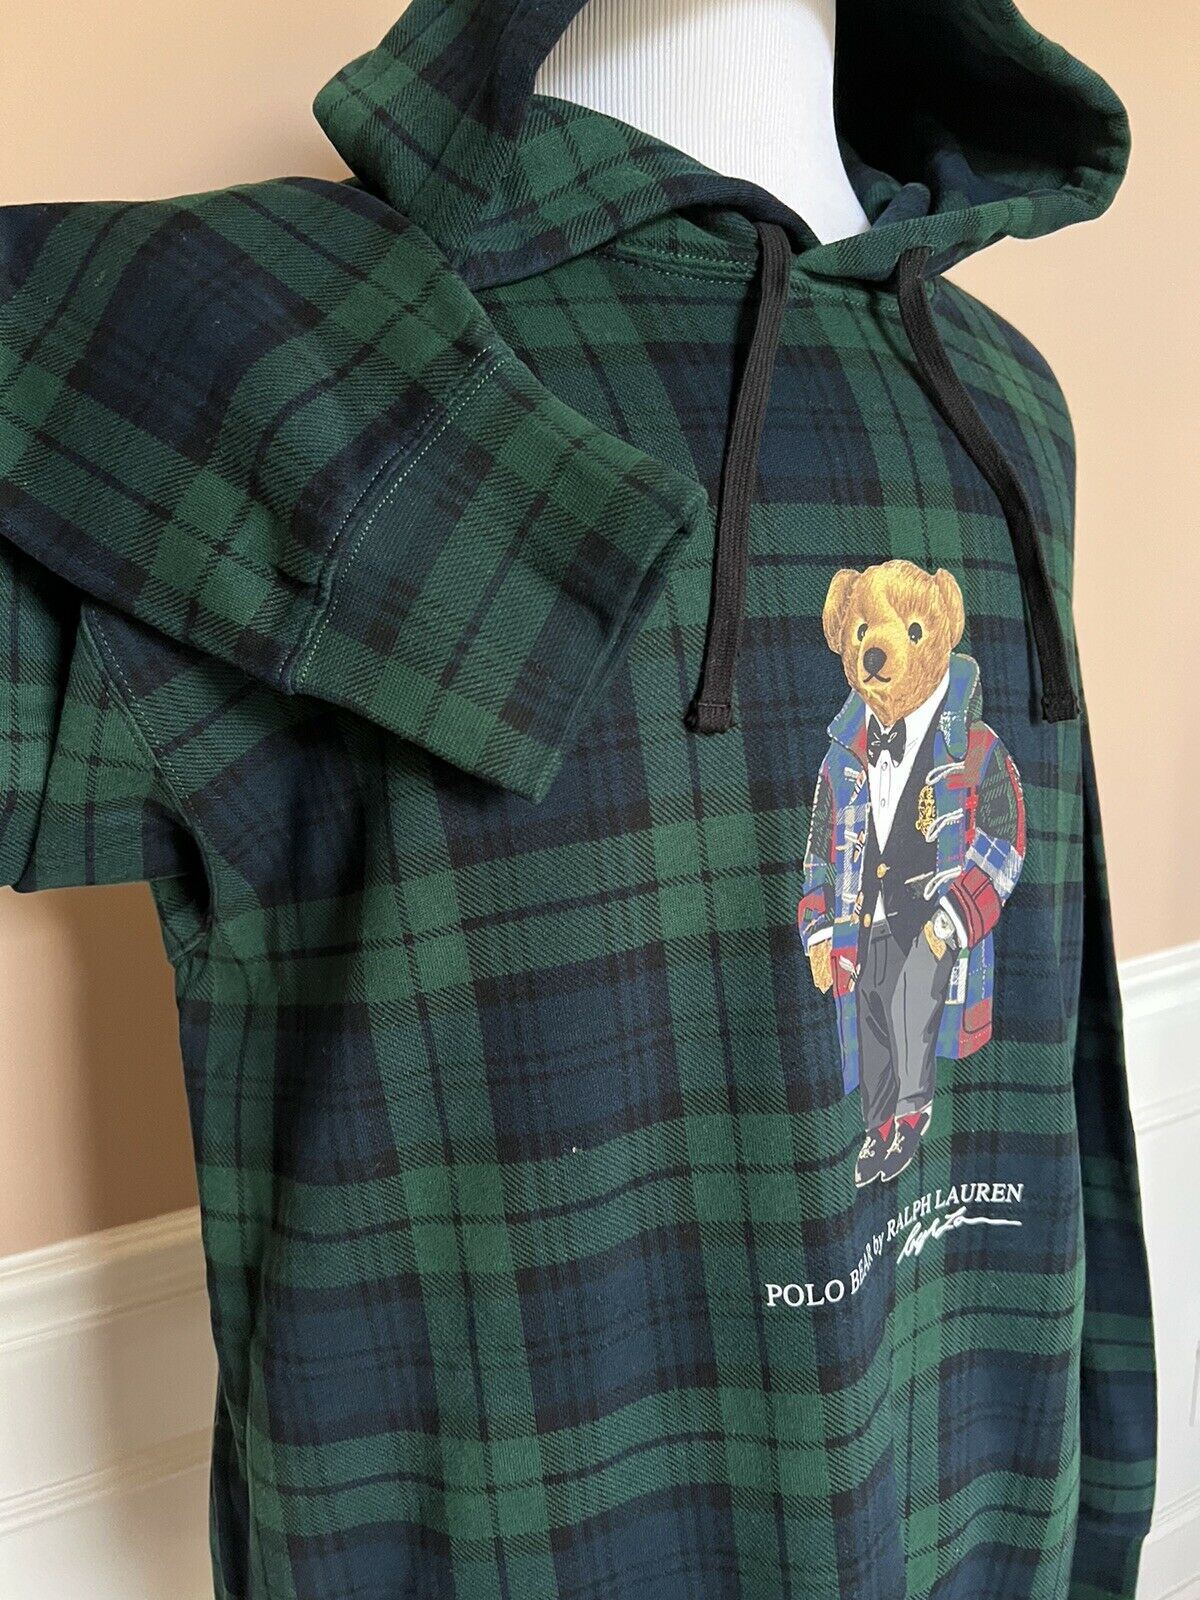 NWT $228 Polo Ralph Lauren Long Sleeve Bear Sweater with Hoodie Green 2XLT/2TGL